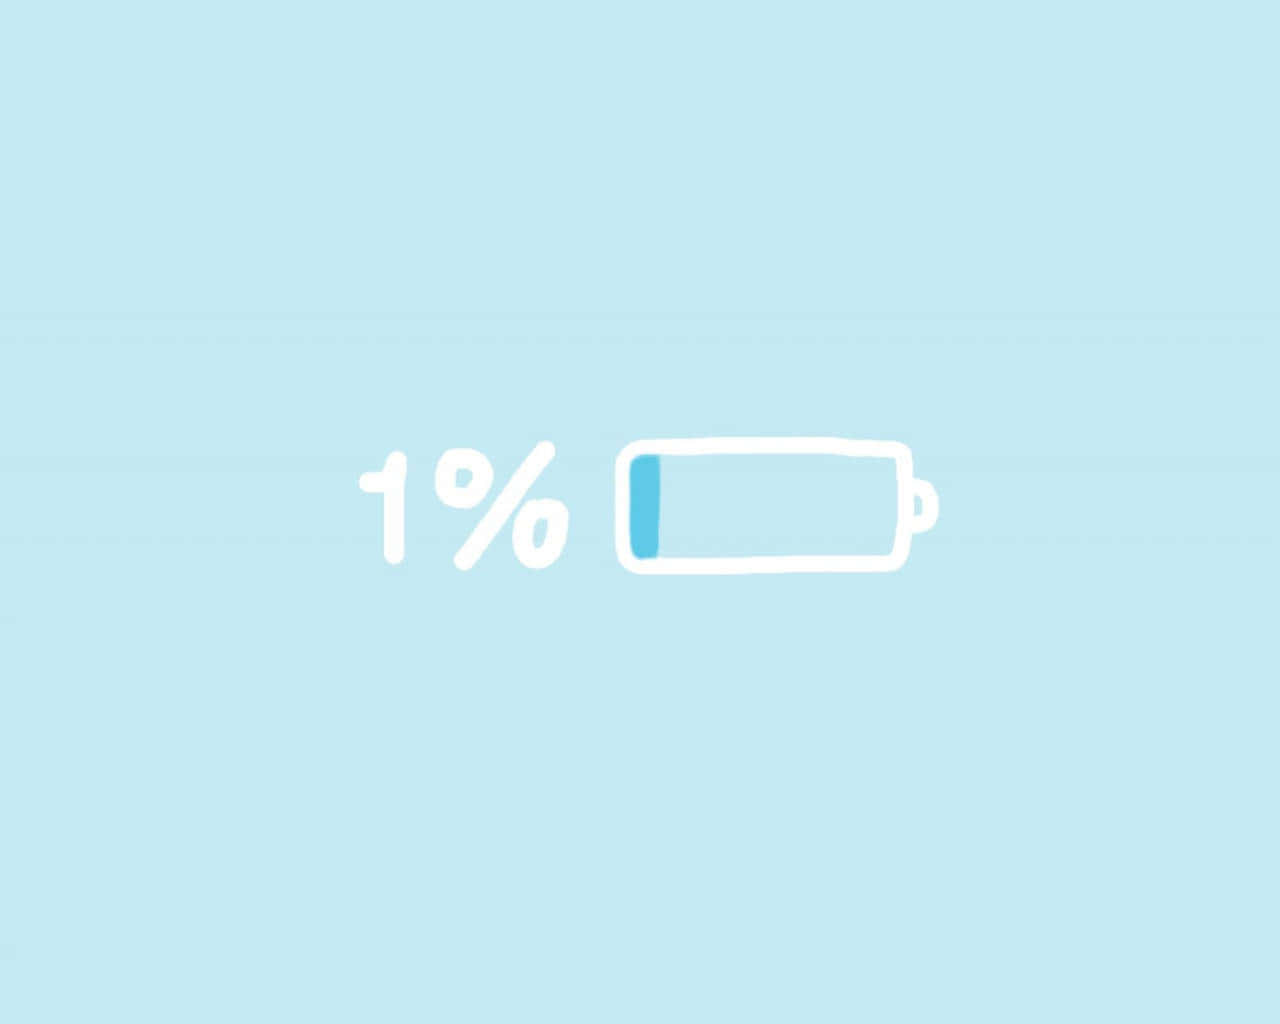 One Percent Battery Life Blue Aesthetic Wallpaper